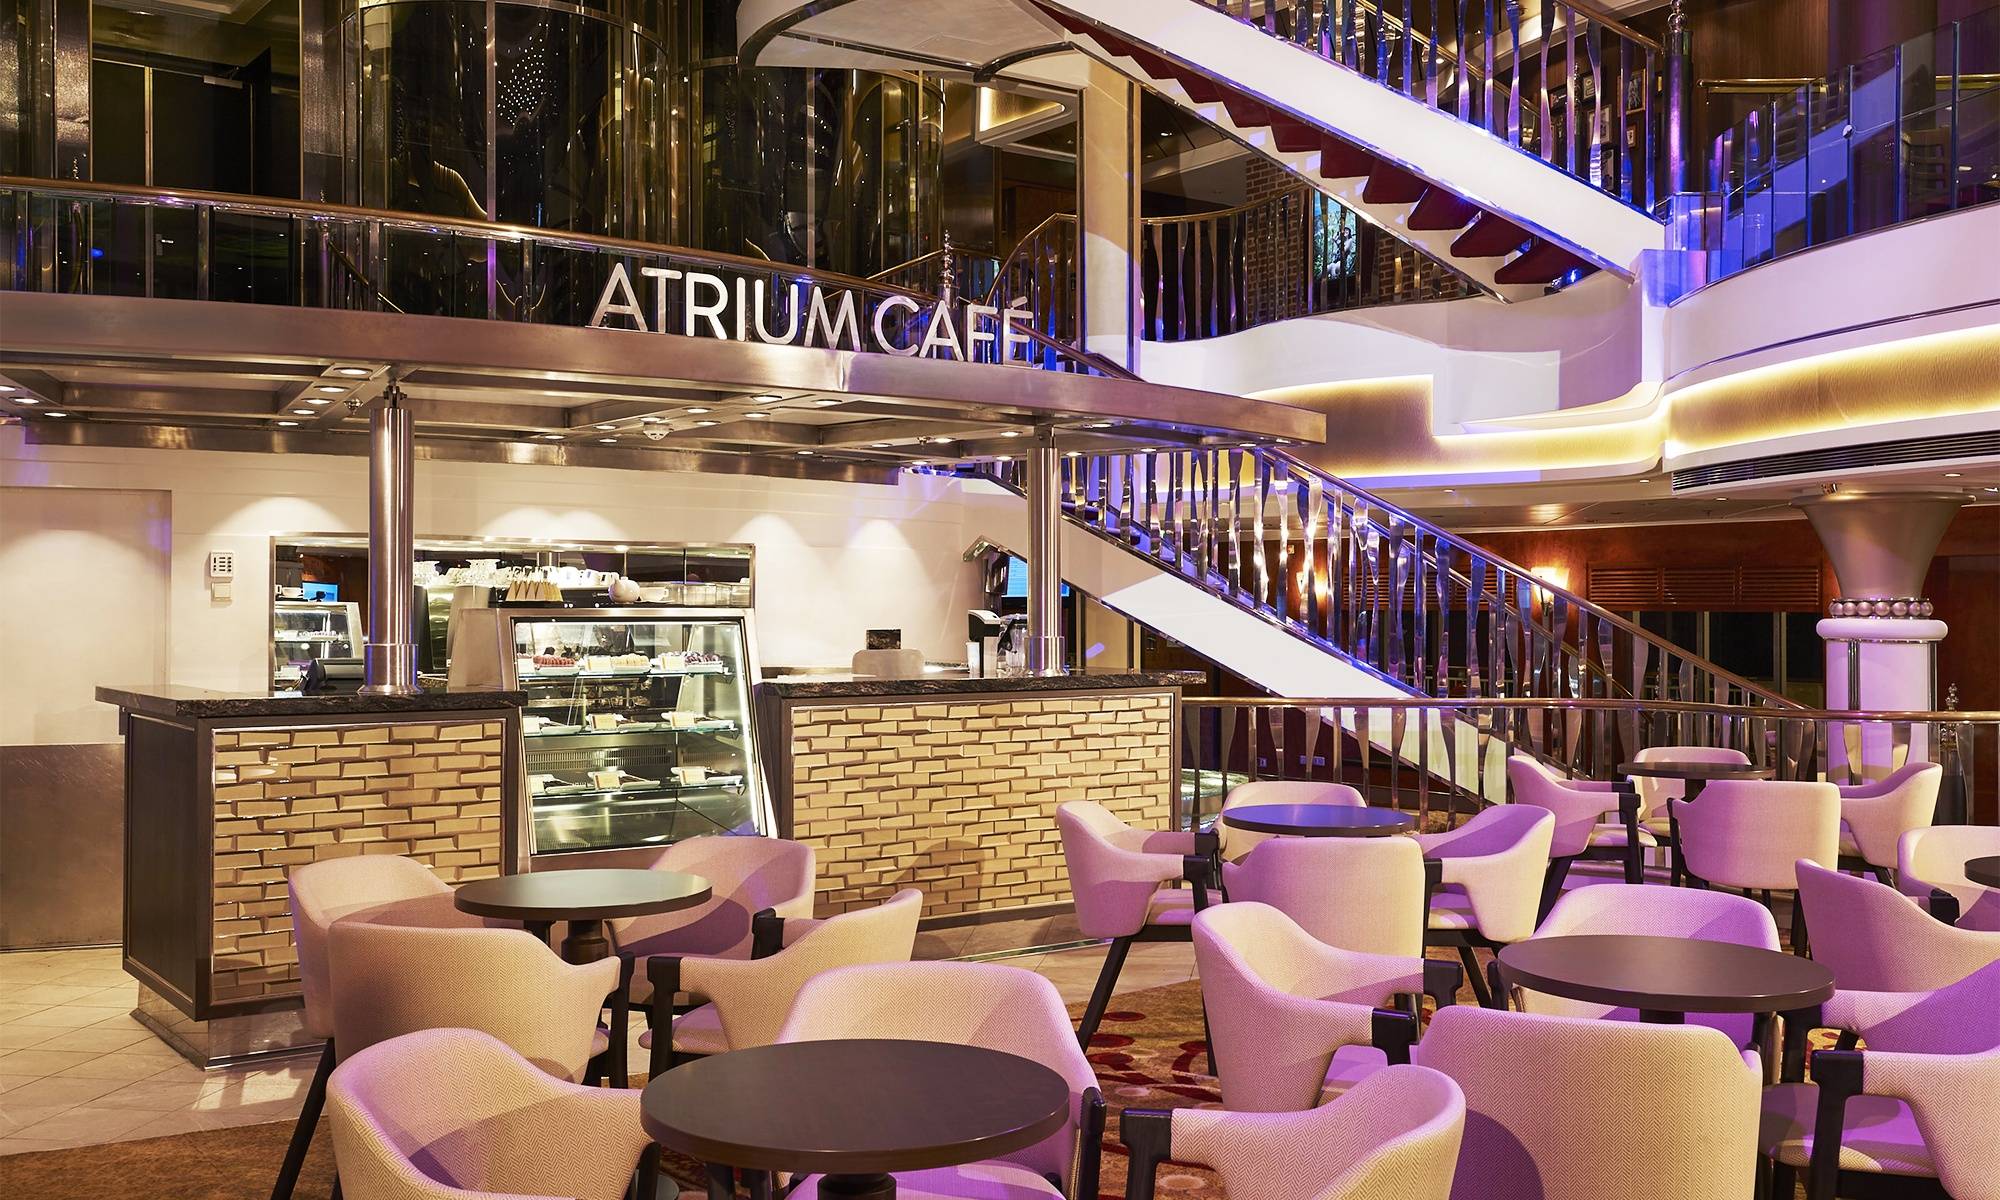 Norwegian Star Atrium Coffee Bar